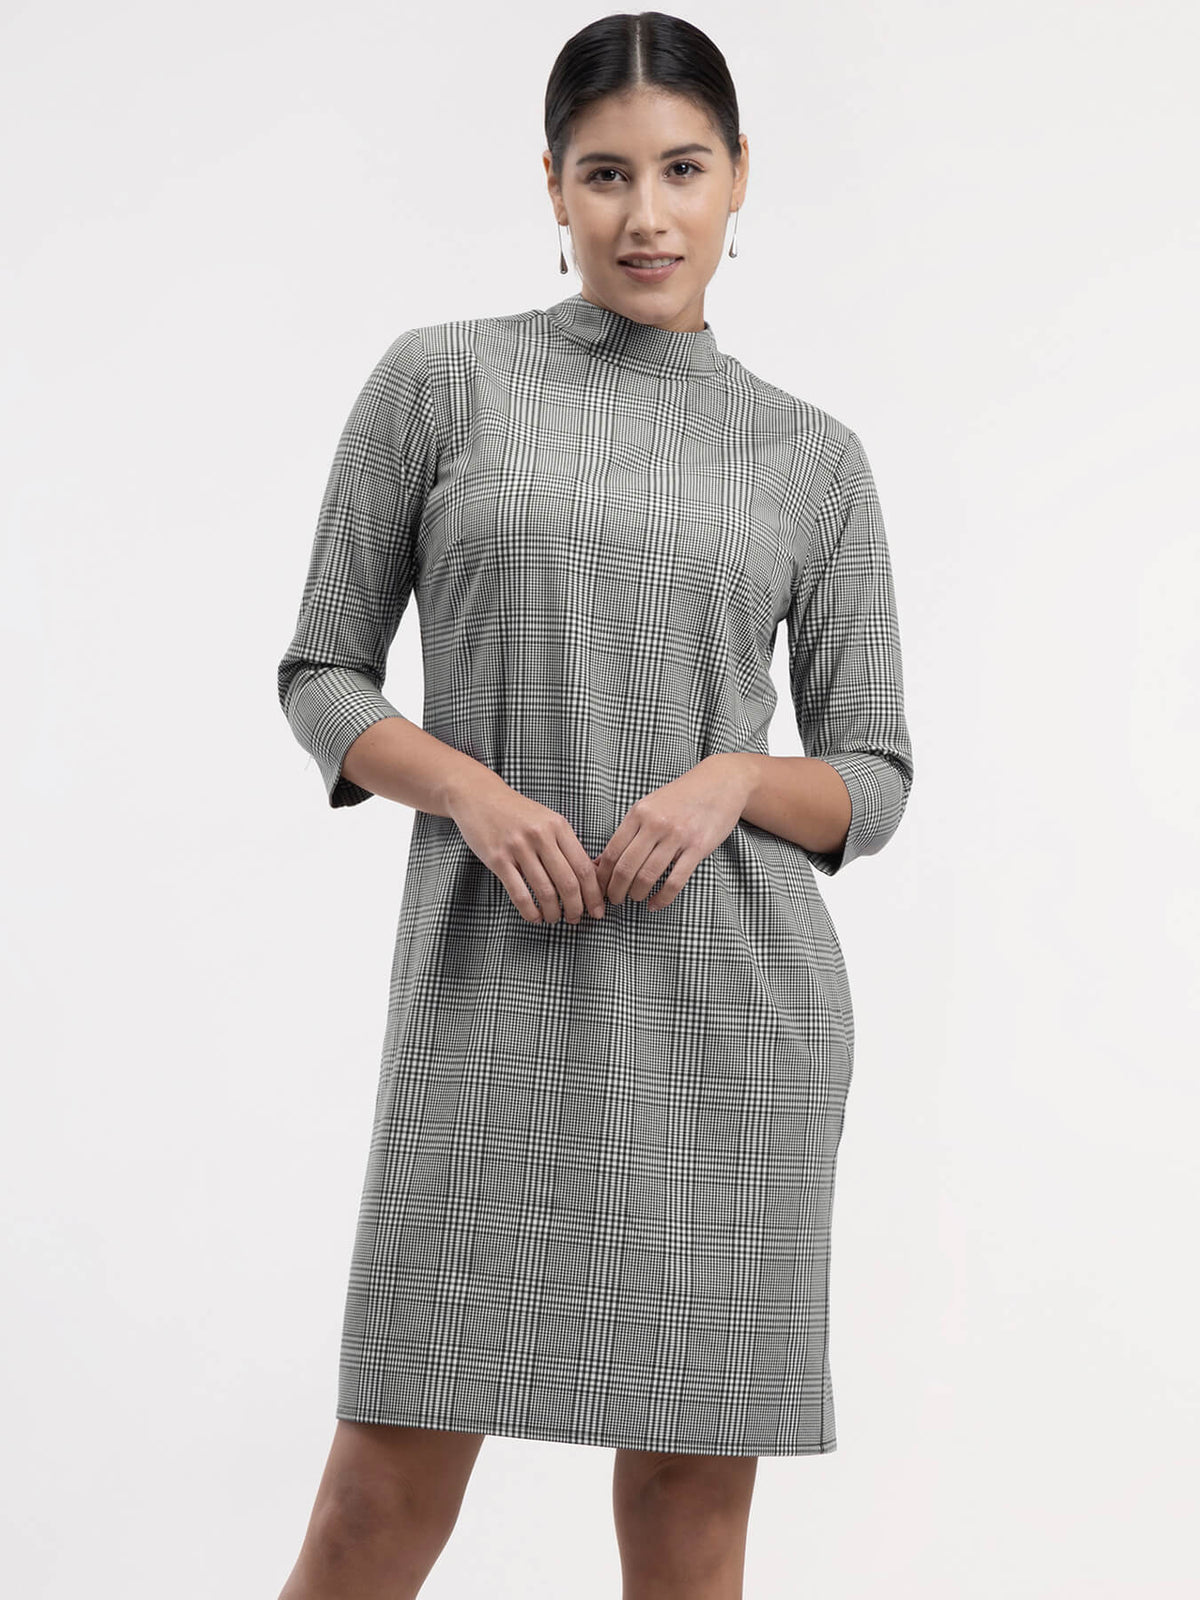 Formal Dresses For Women – Buy Ladies Office Wear Dresses Online in India